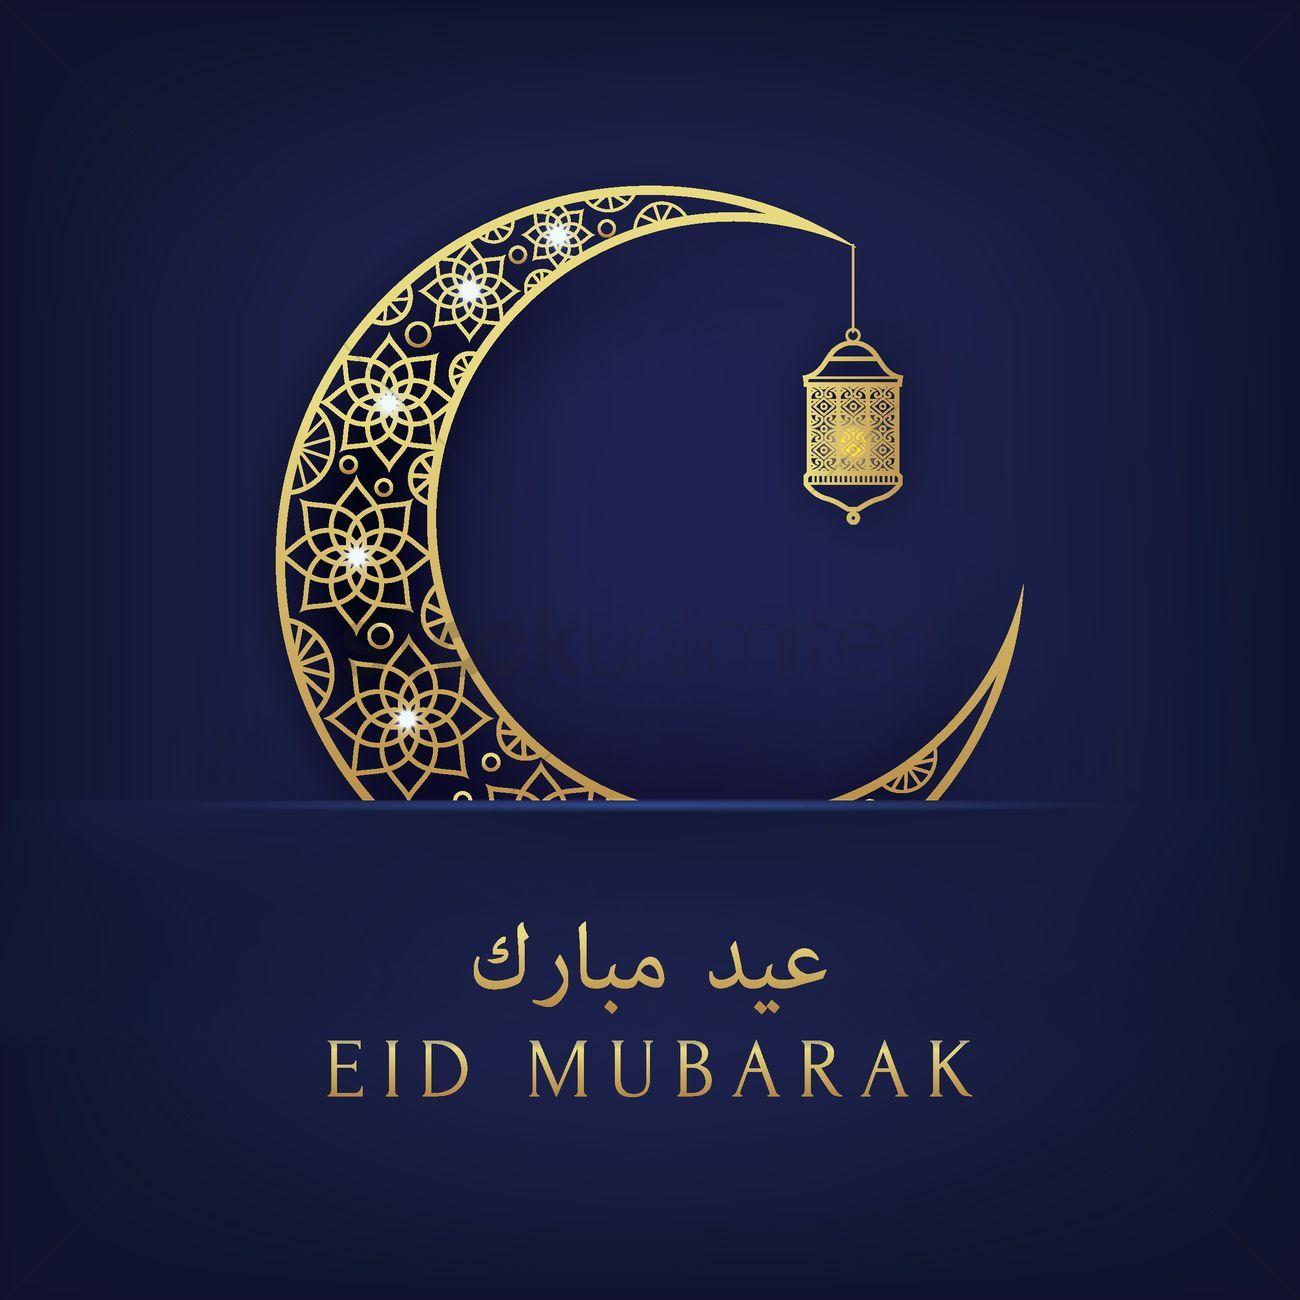 Eid Logo - Eid mubarak with jawi greeting Vector Image - 1828208 | StockUnlimited